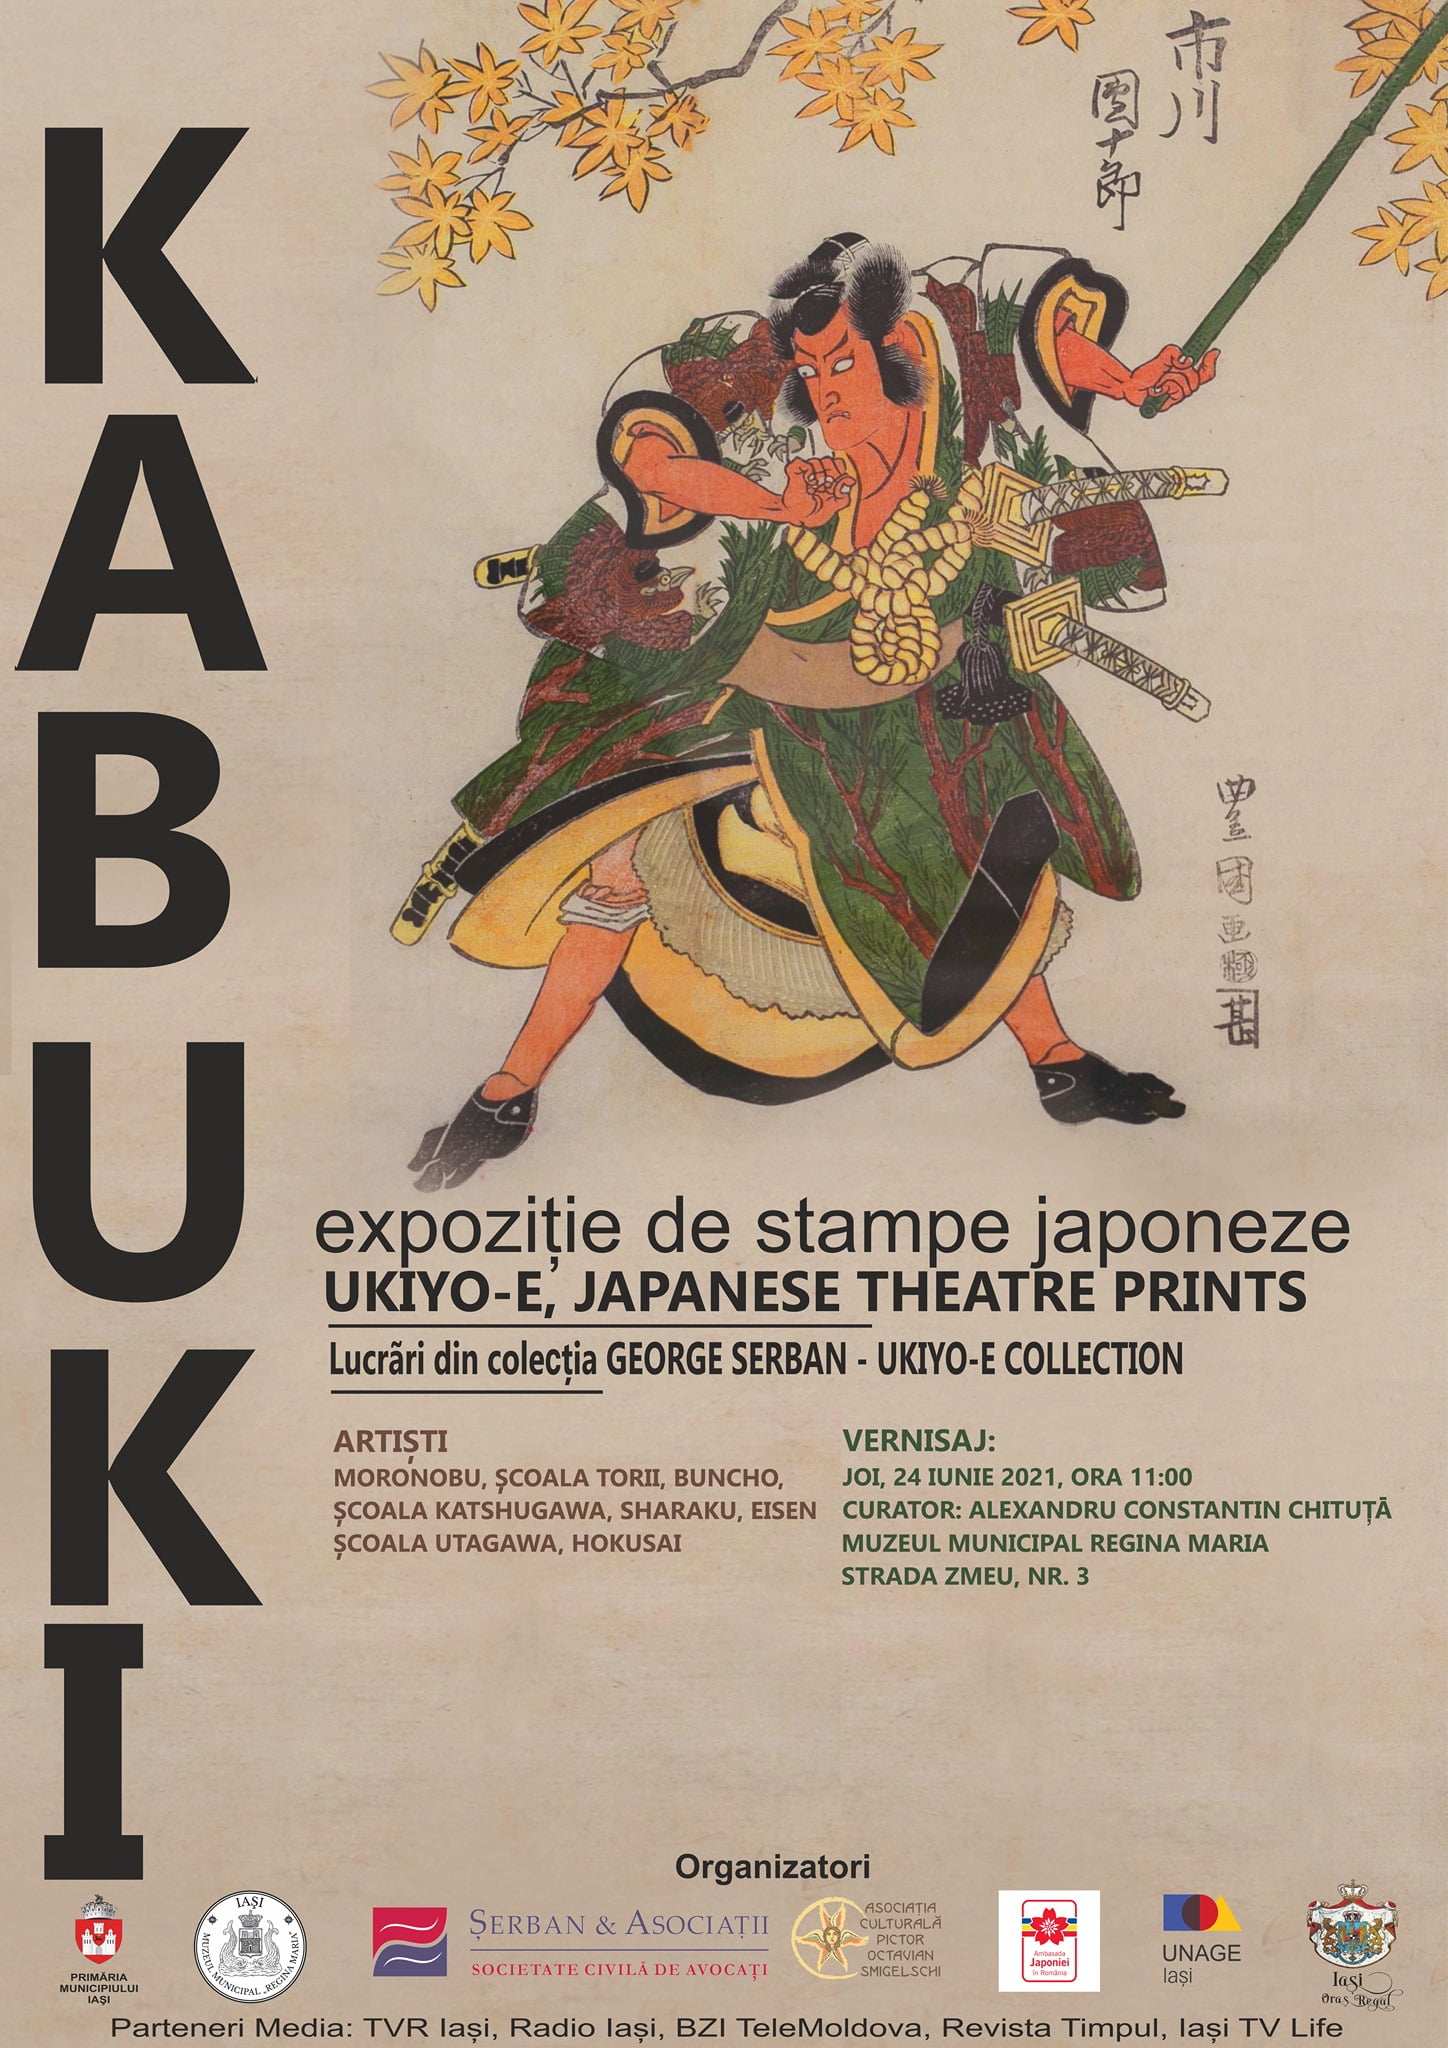 expoziția de stampe japoneze ,,Kabuki – Ukyio-e Japanese Theatre Prints”